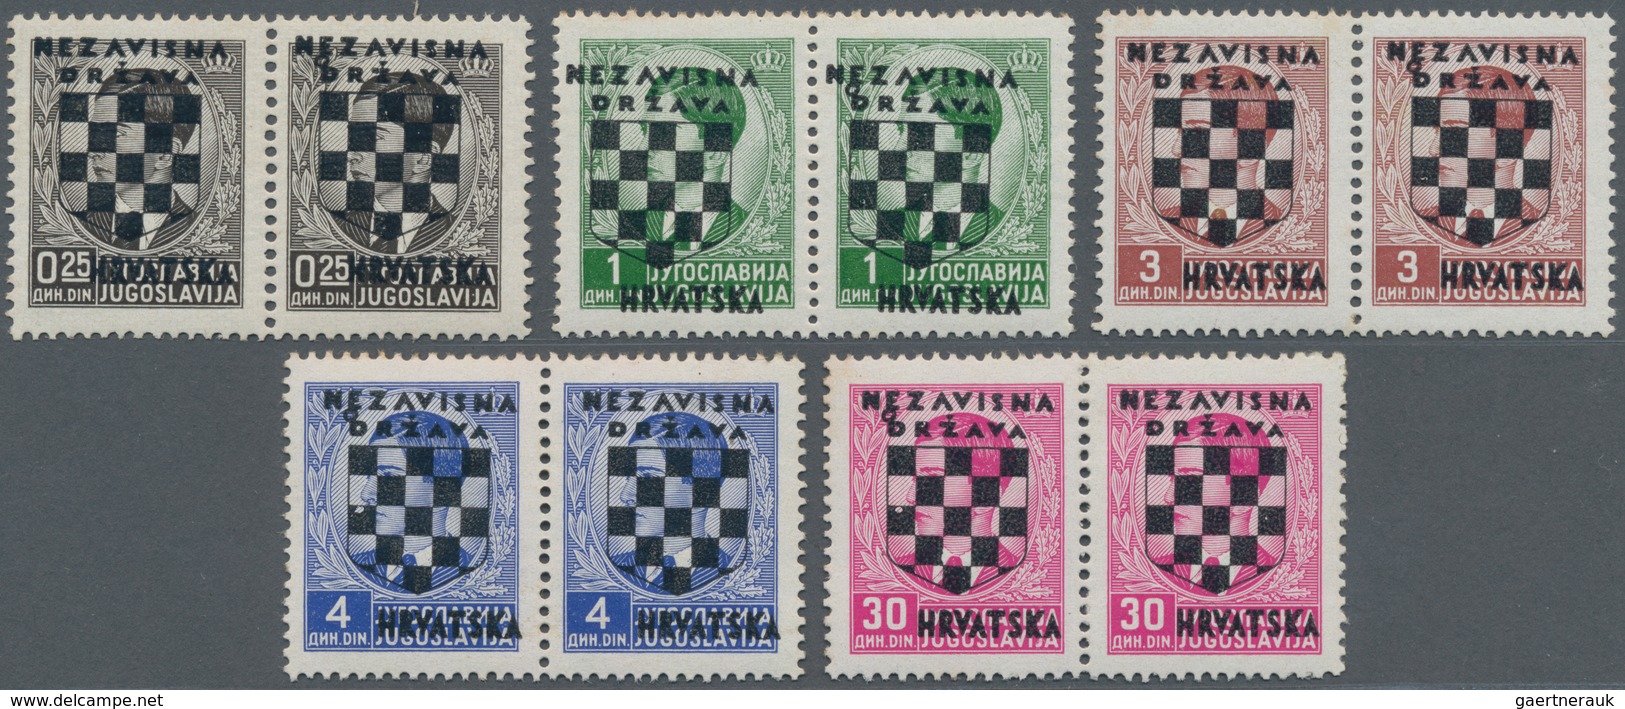 Kroatien: 1941, 2nd Croatian Provisionals, King Peter II Last Definitive Issue Overprinted "NEZAVISN - Croatia